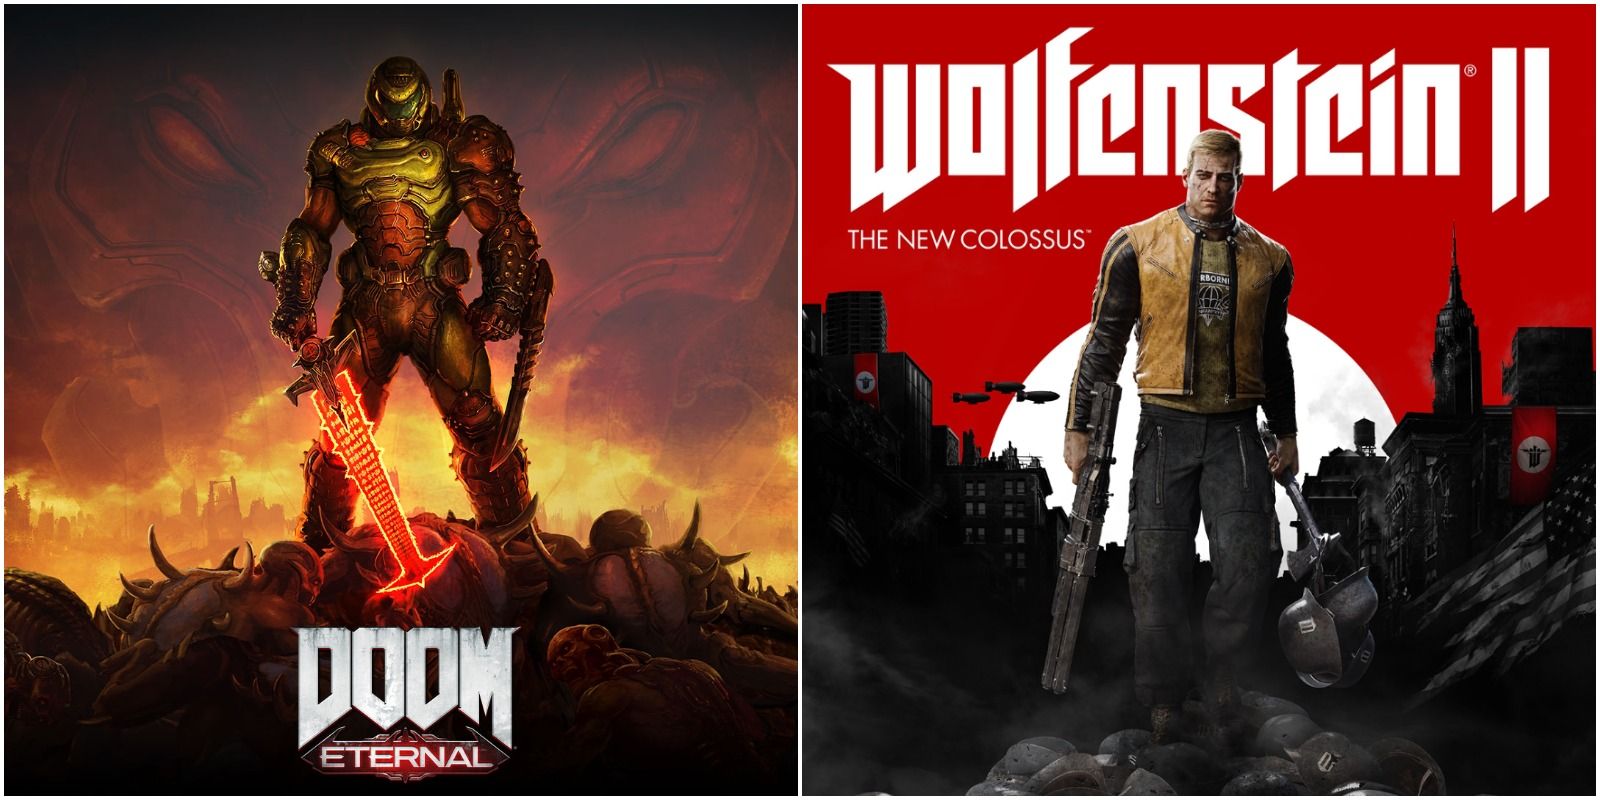 Doom Eternal and Wolfenstein II: The New Colossus